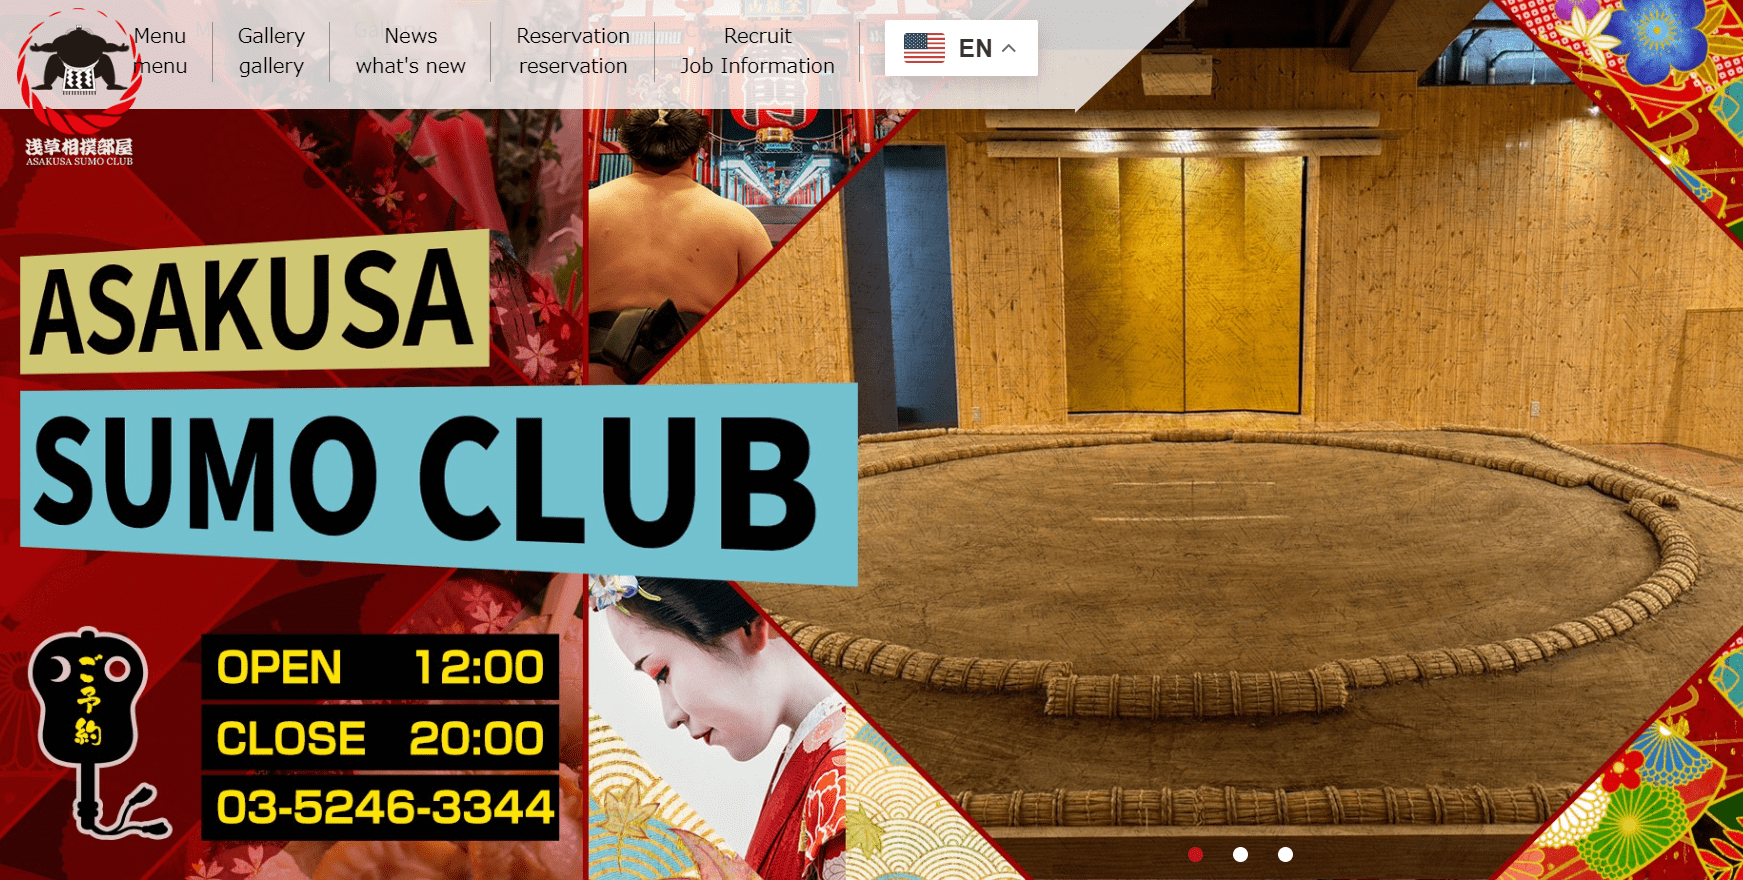 Asakusa Sumo Club website